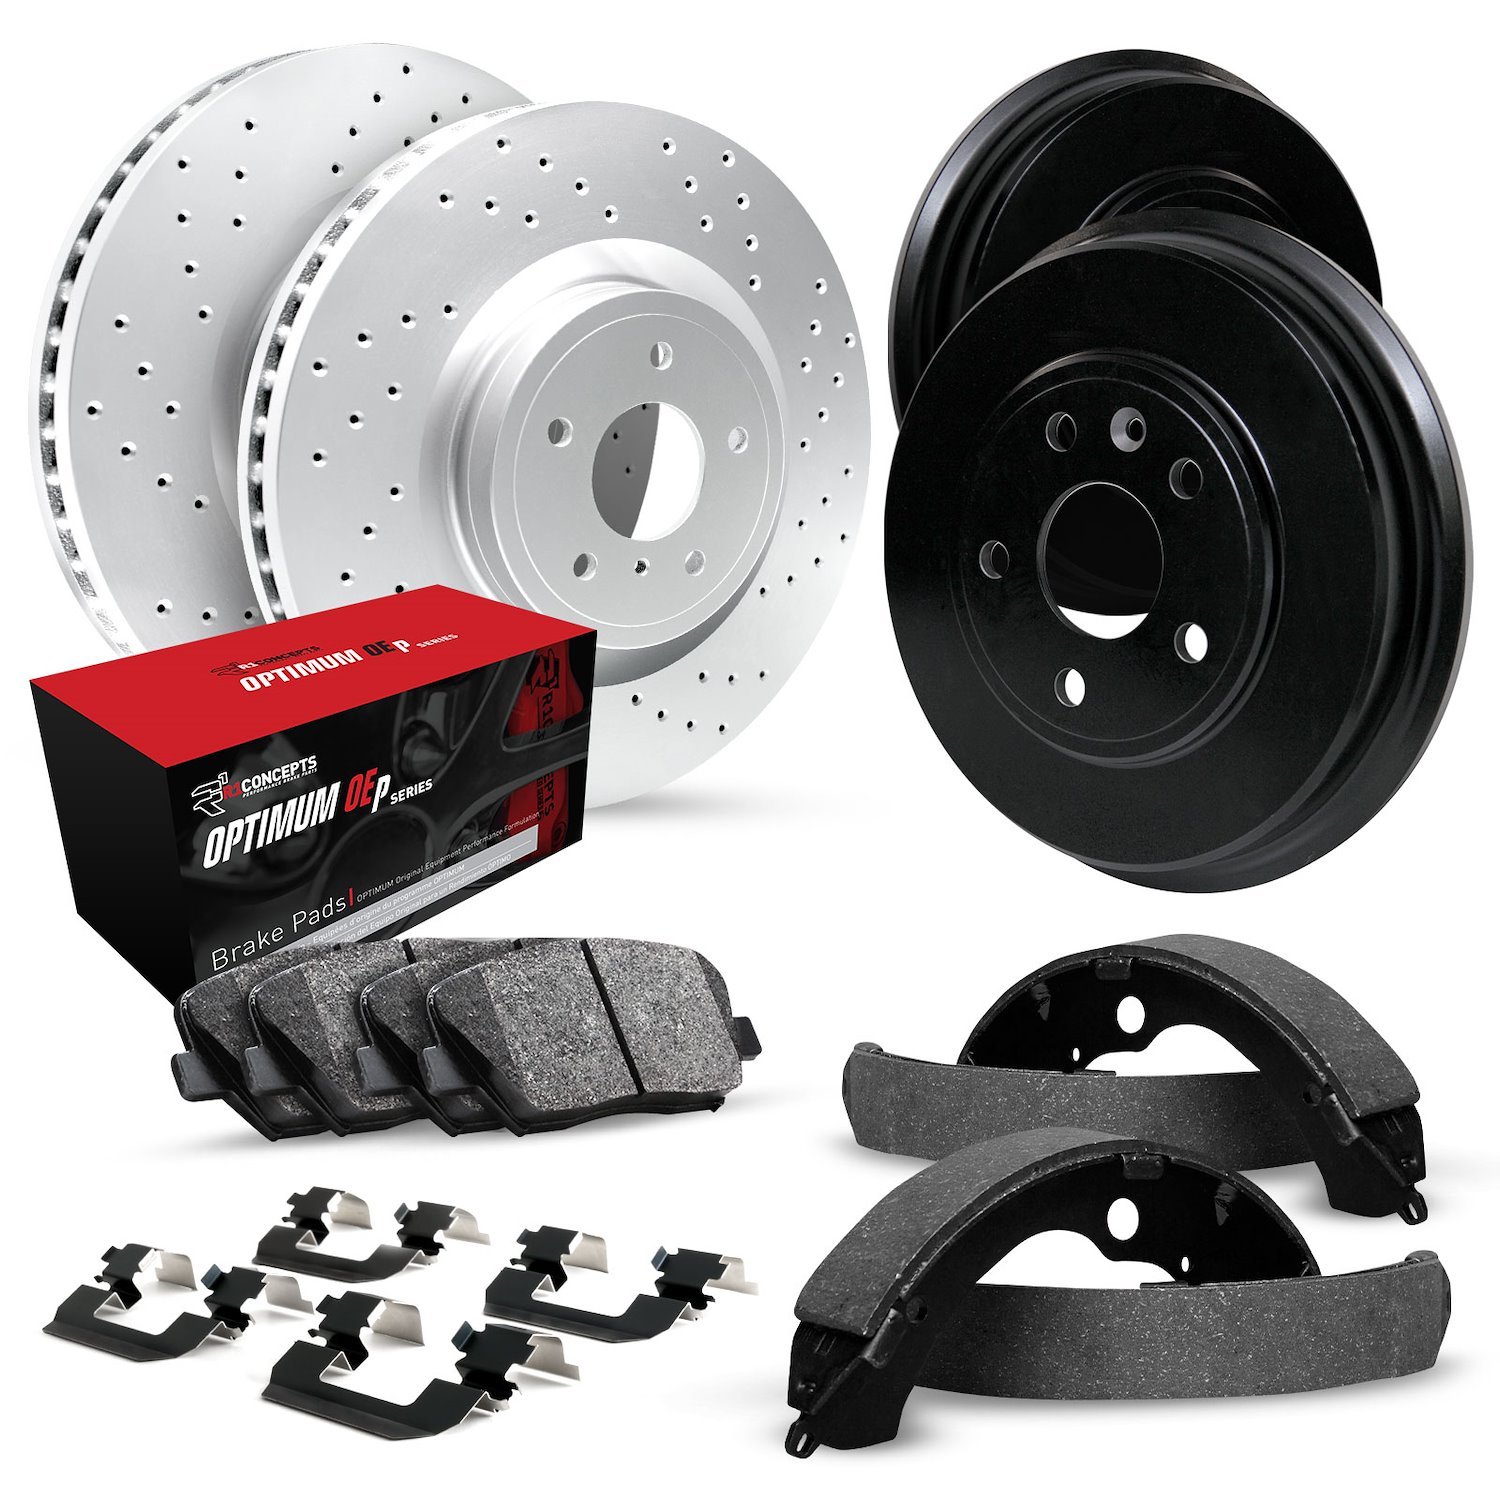 GEO-Carbon Drilled Brake Rotor & Drum Set w/Optimum OE Pads, Shoes, & Hardware, 2007-2014 Infiniti/Nissan